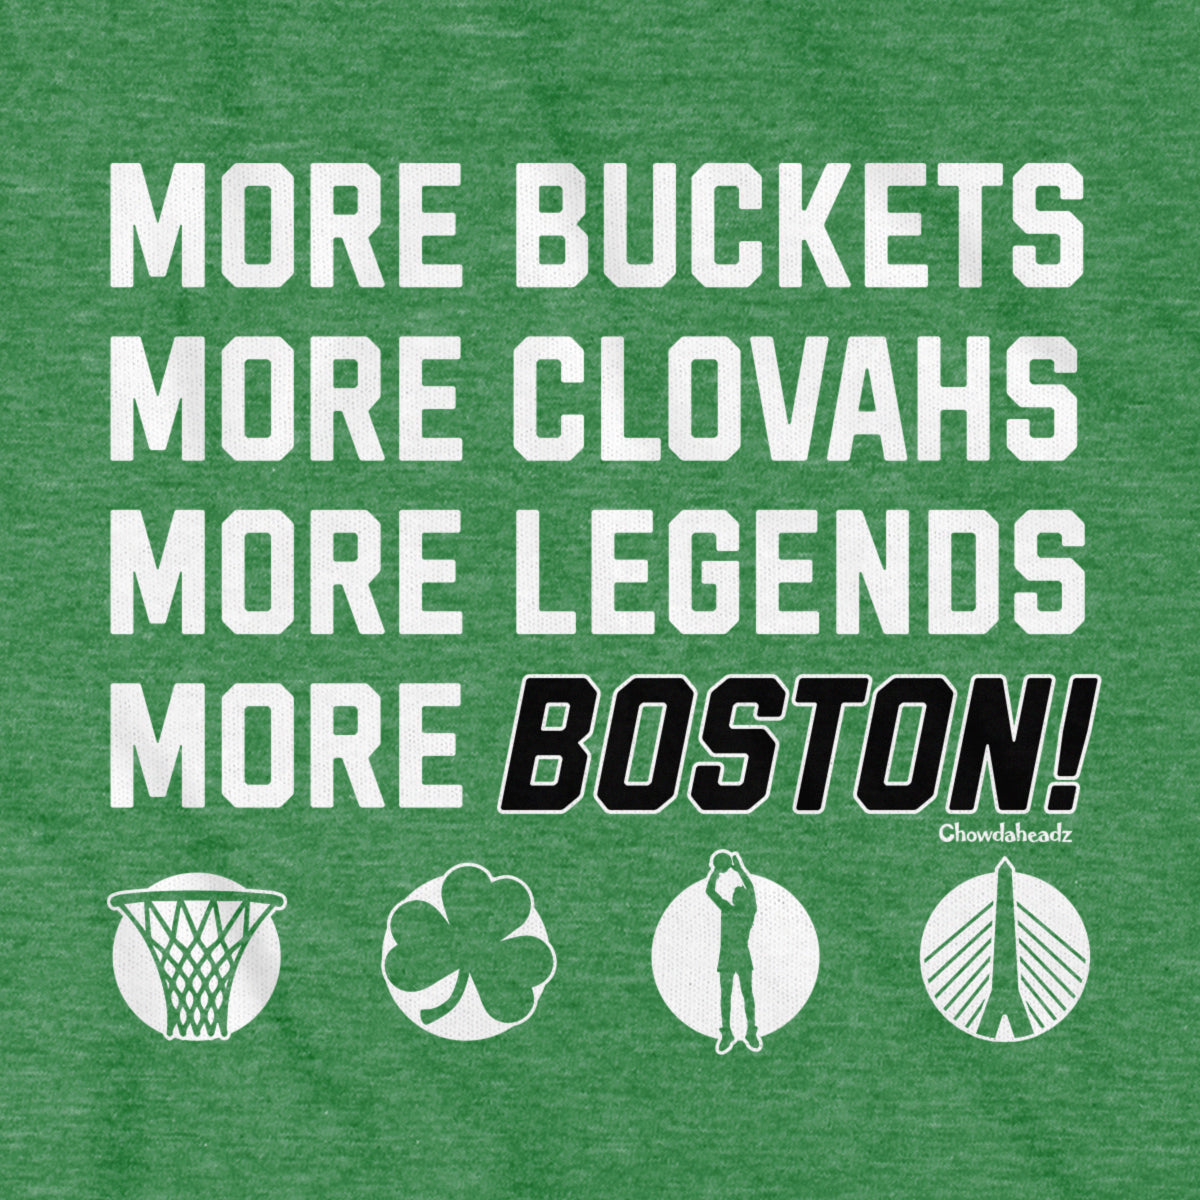 More Boston Basketball T-Shirt - Chowdaheadz